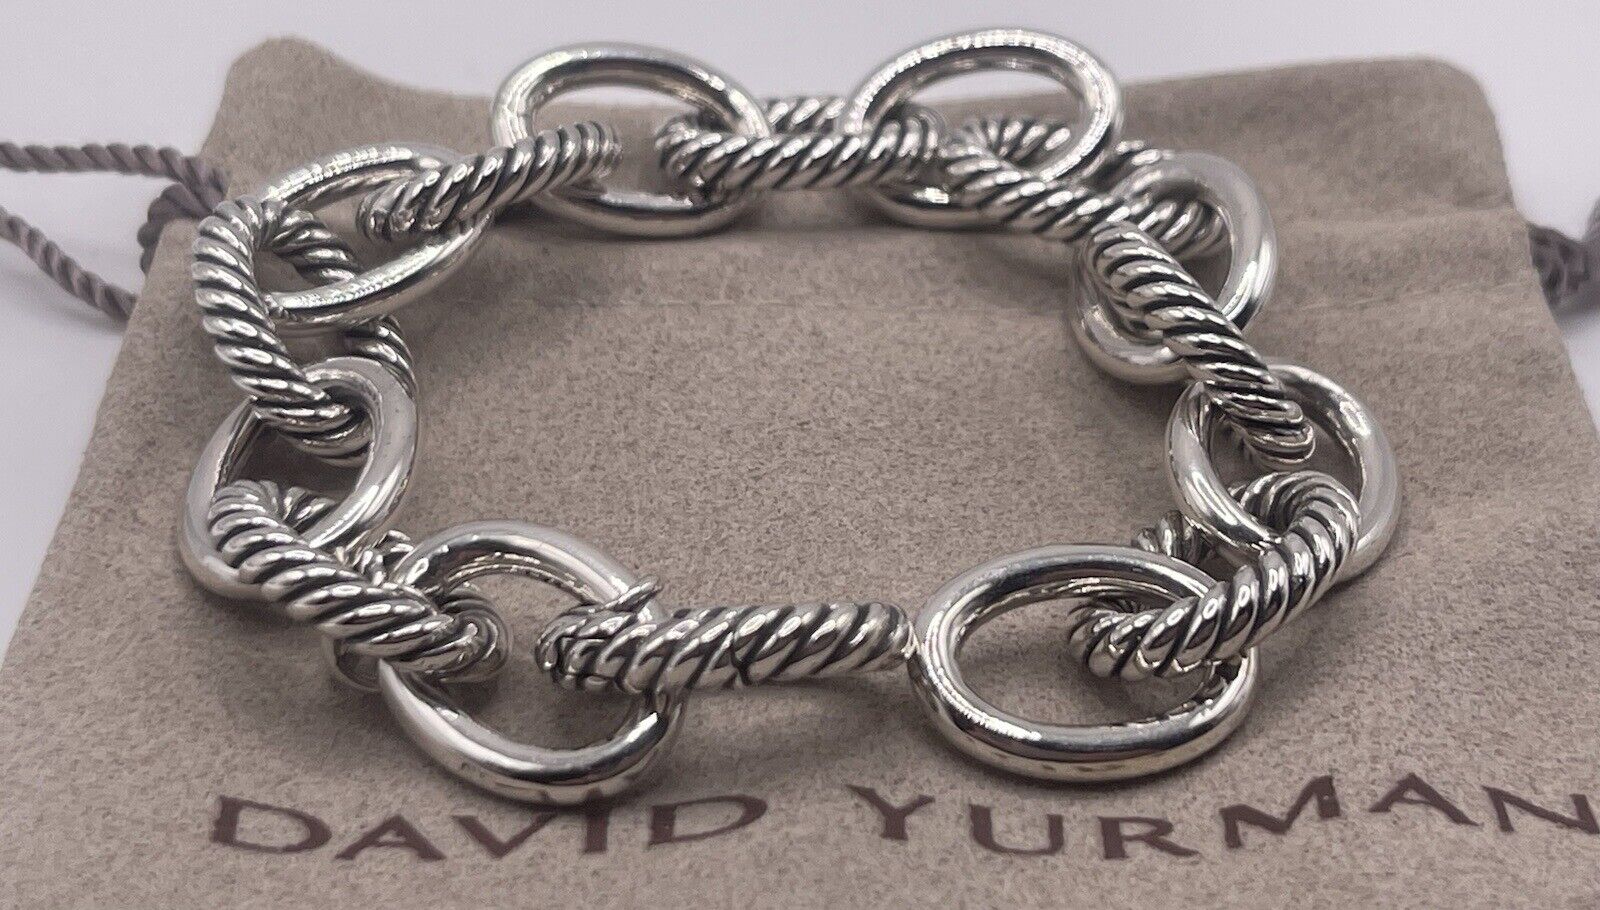 David Yurman Sterling Silver Oval Link Cable Chain Bracelet